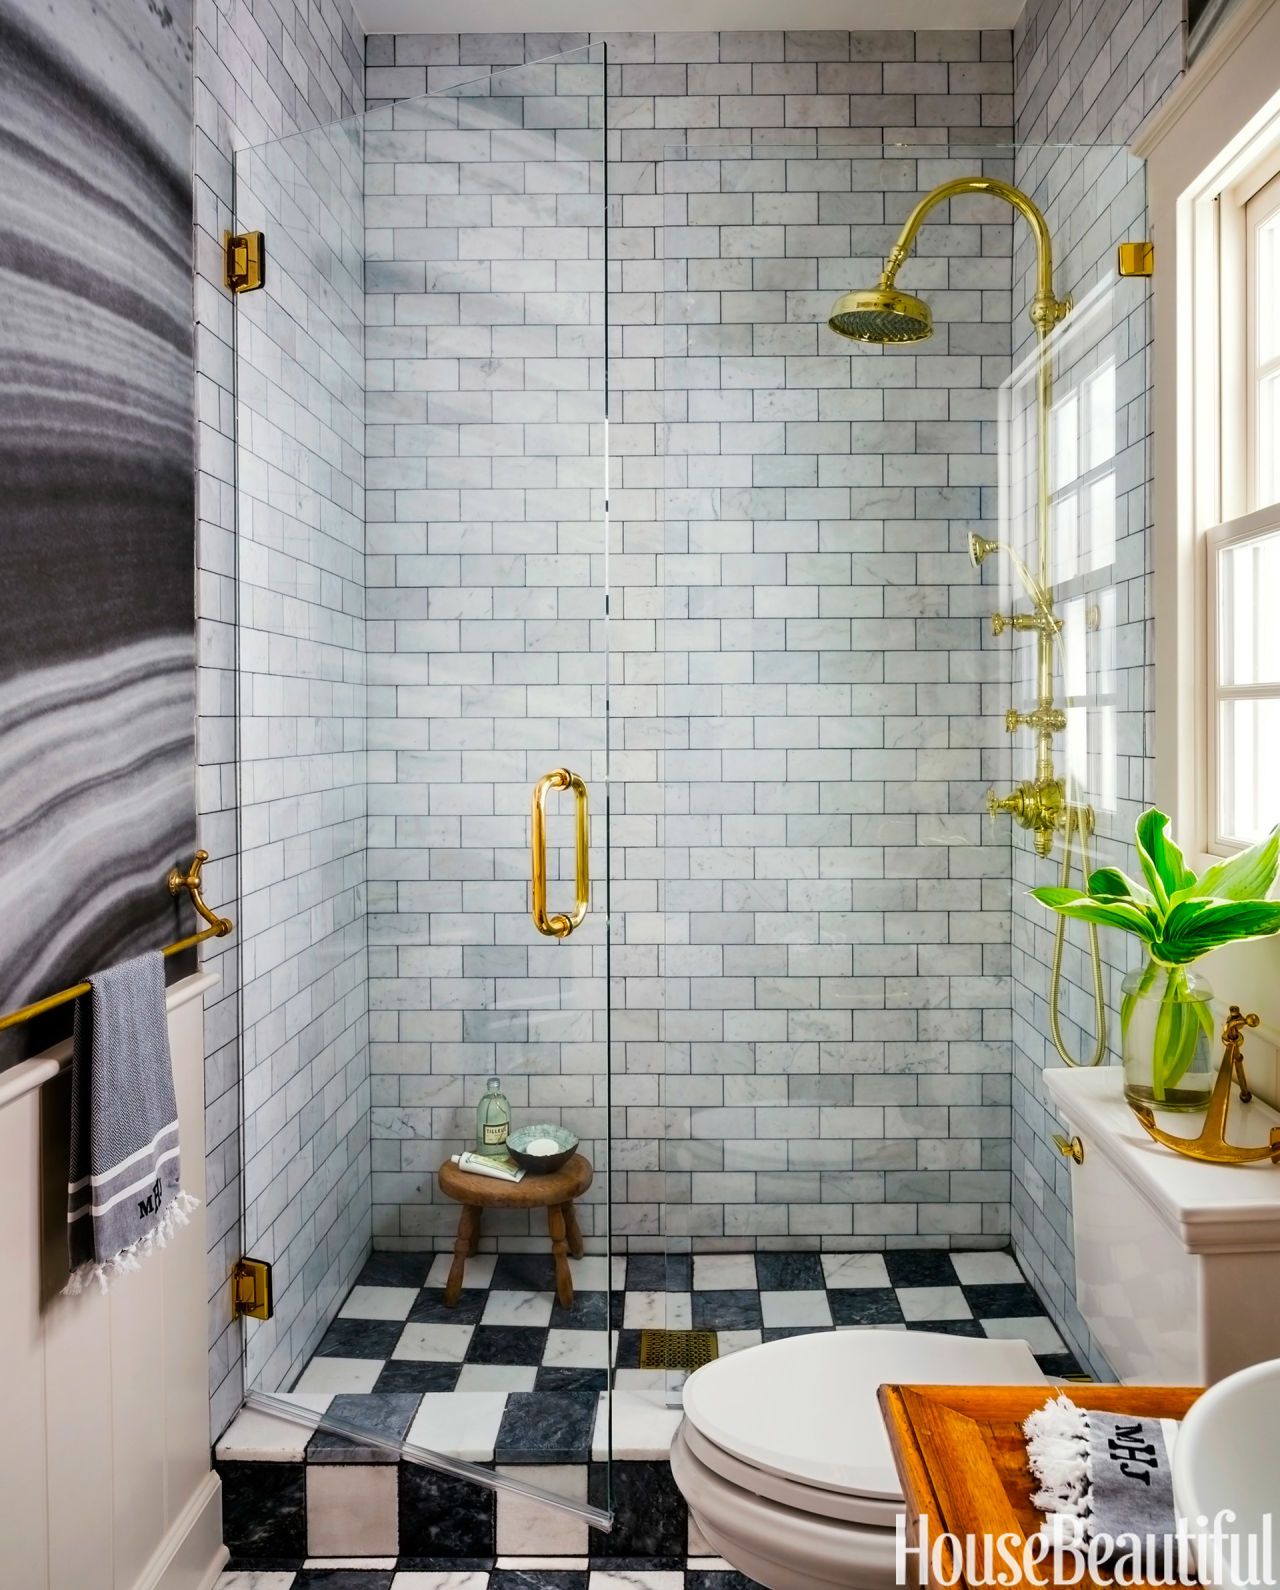 25 Small Bathroom Design Ideas Small Bathroom Solutions